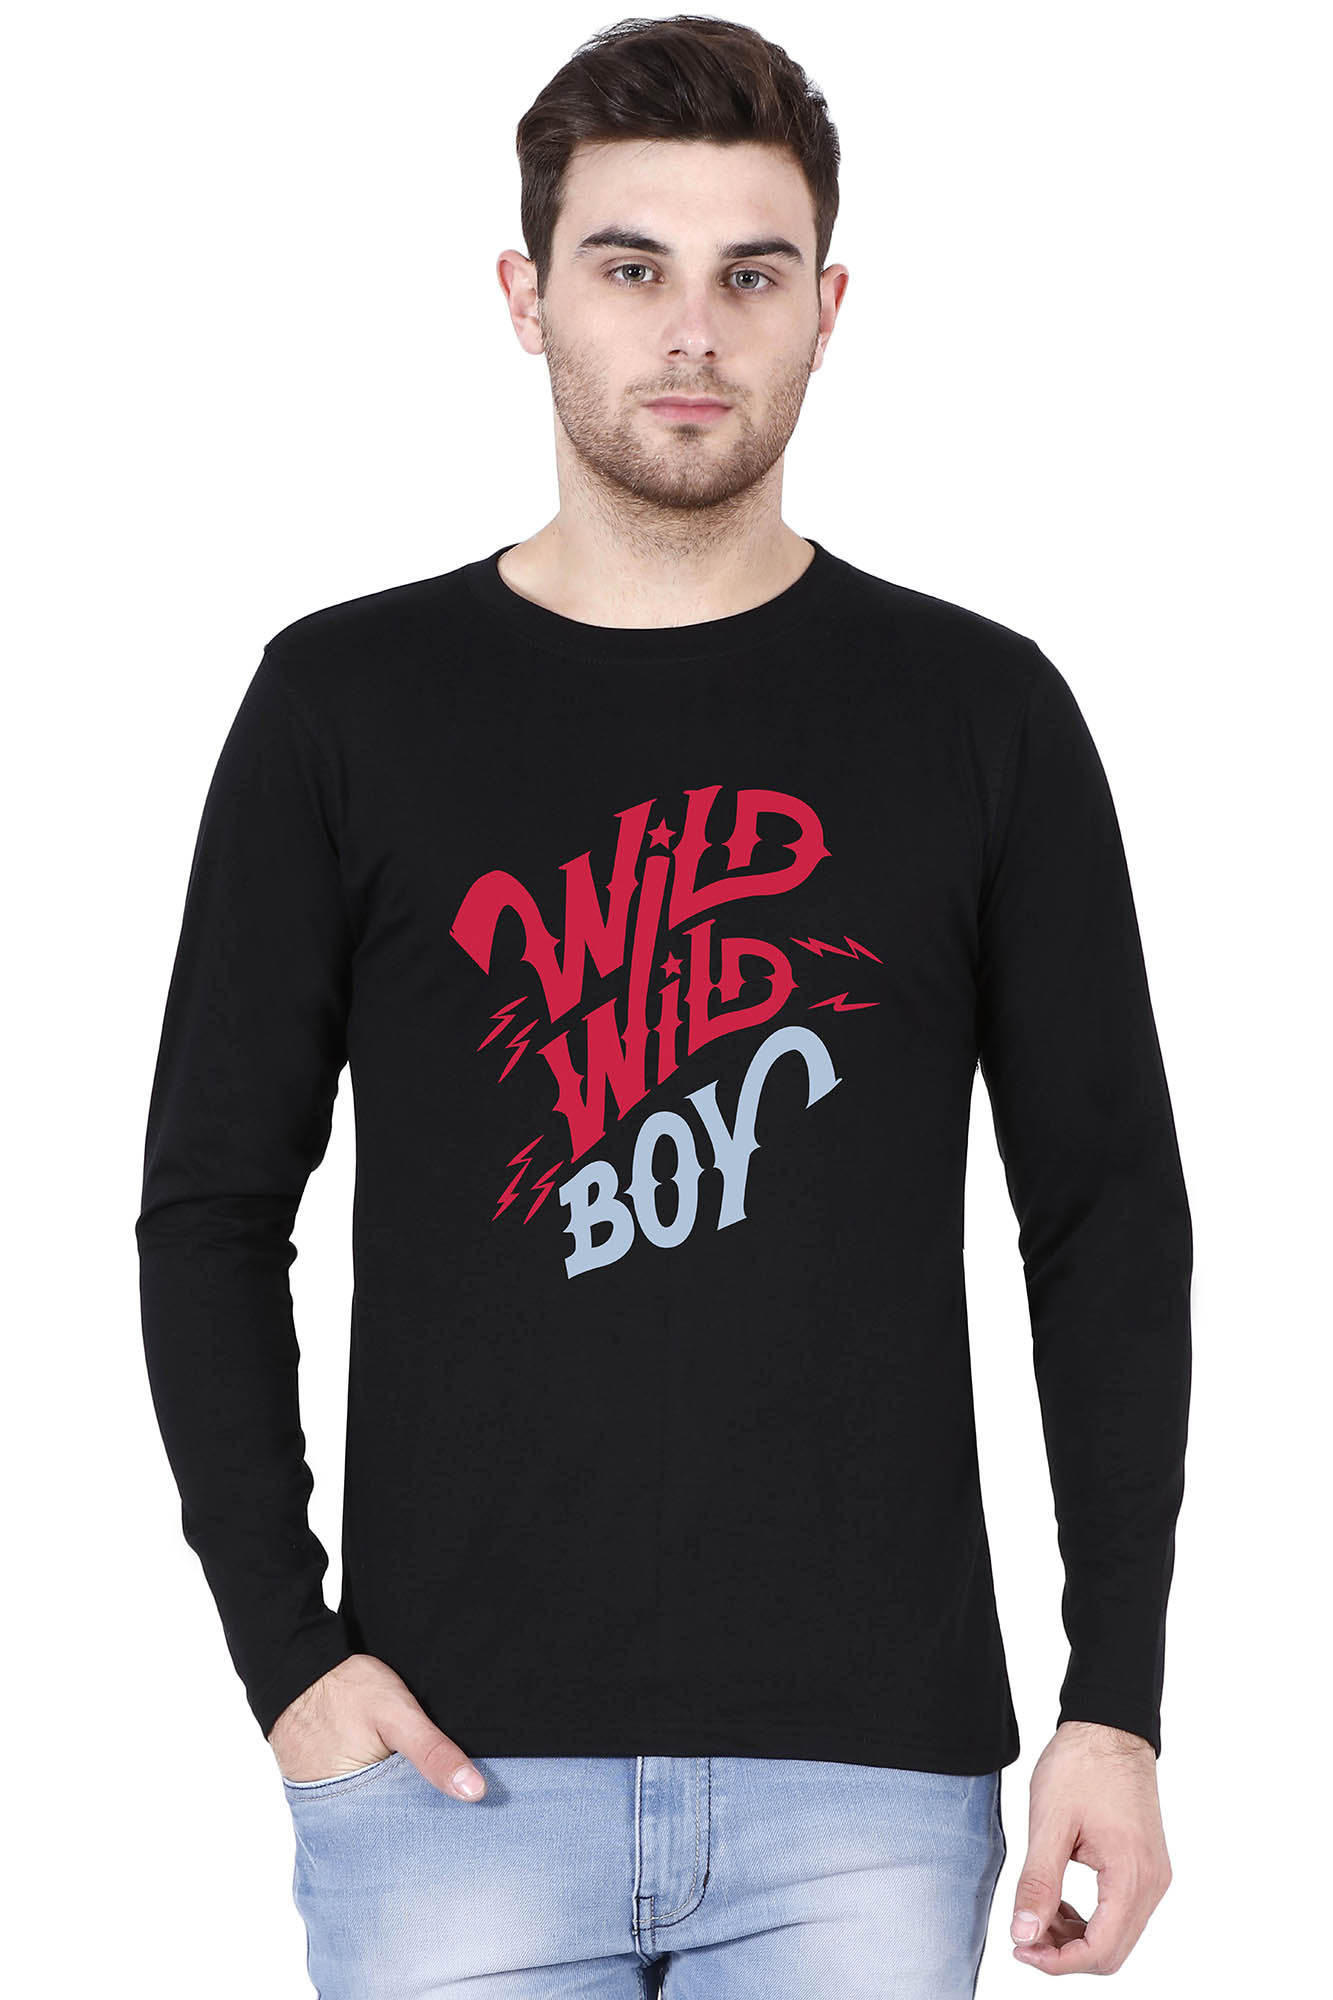 Wild Wild boy - Mens Full Sleeve Tshirt